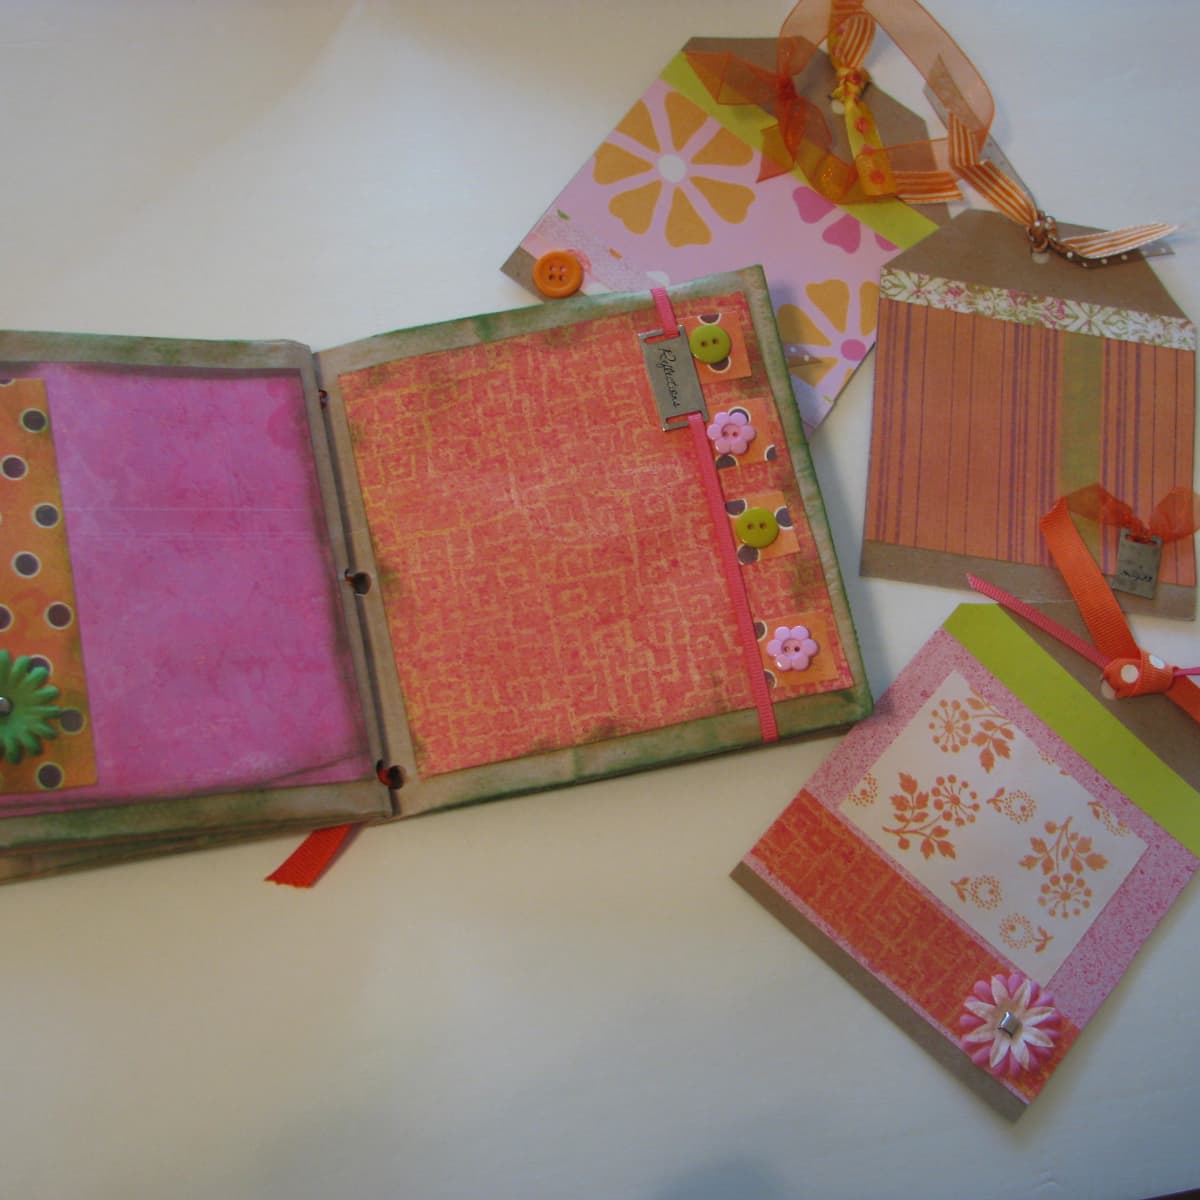 6 Colorful Decorative Paper Edge Scissor Set, Great for Teachers, Crafts,  Scrapbooking, Kids Design